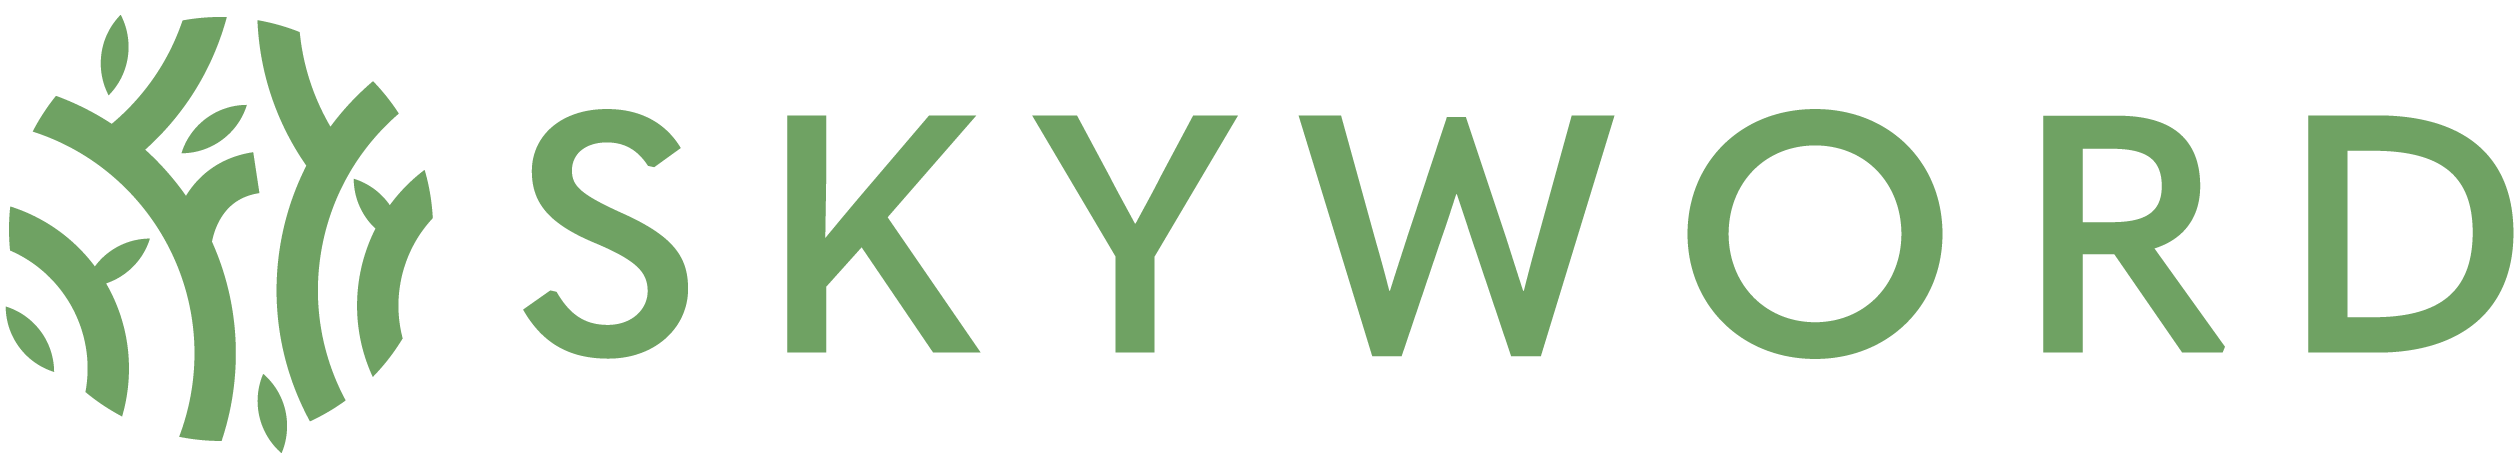 Skyword_logo